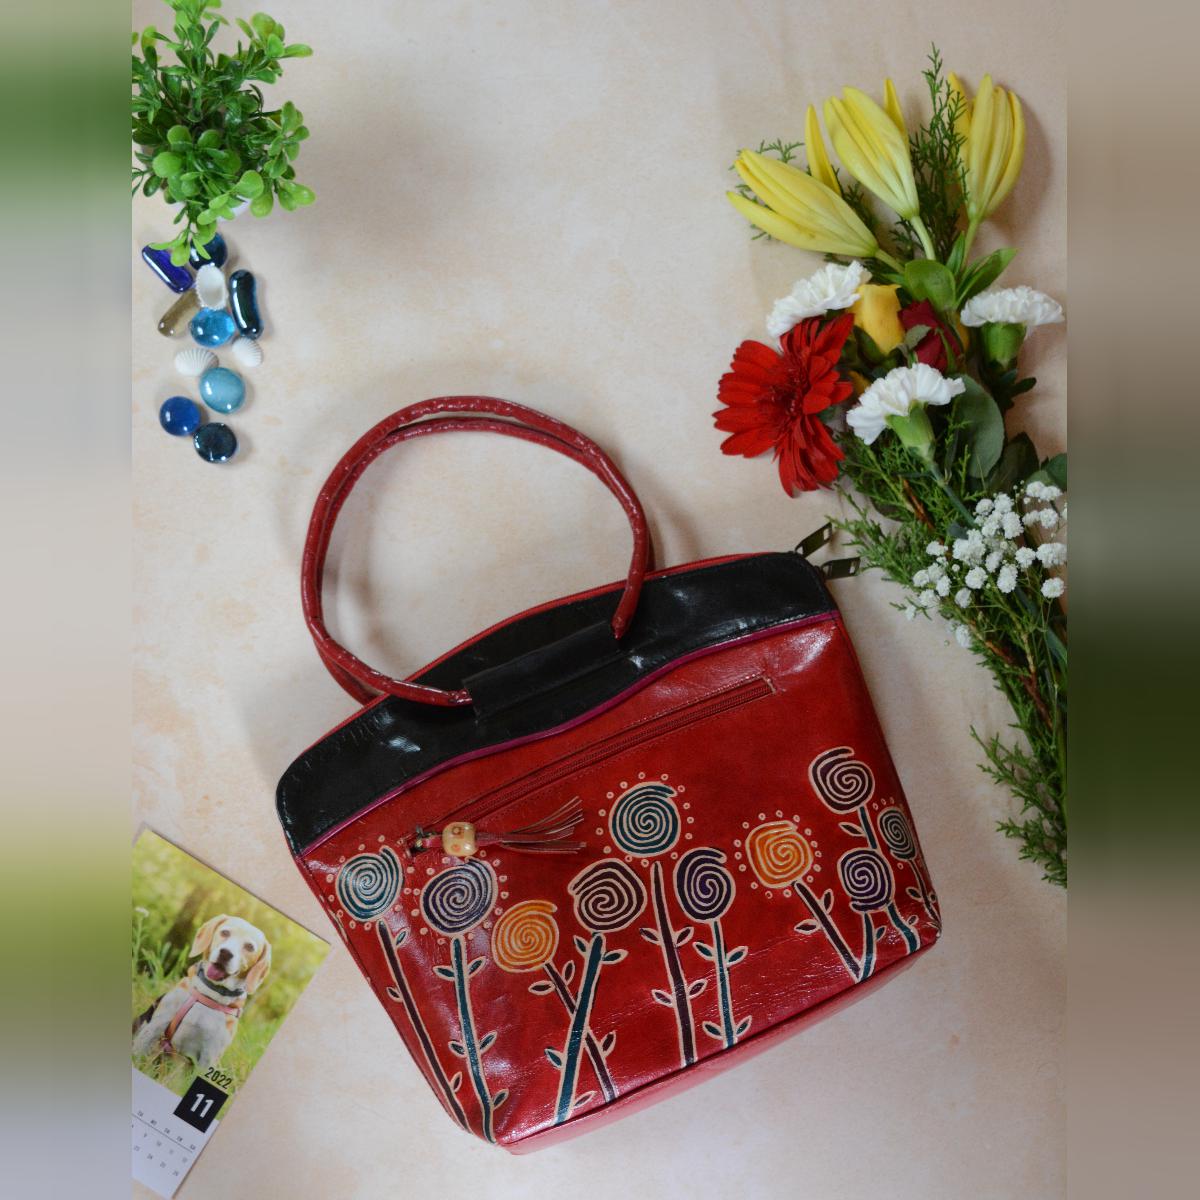 Buy CLASSIQUE Shantiniketan Pure Leather Traditional Printed Handbag  Shoulder For Women Shakuntala Printed at Amazon.in